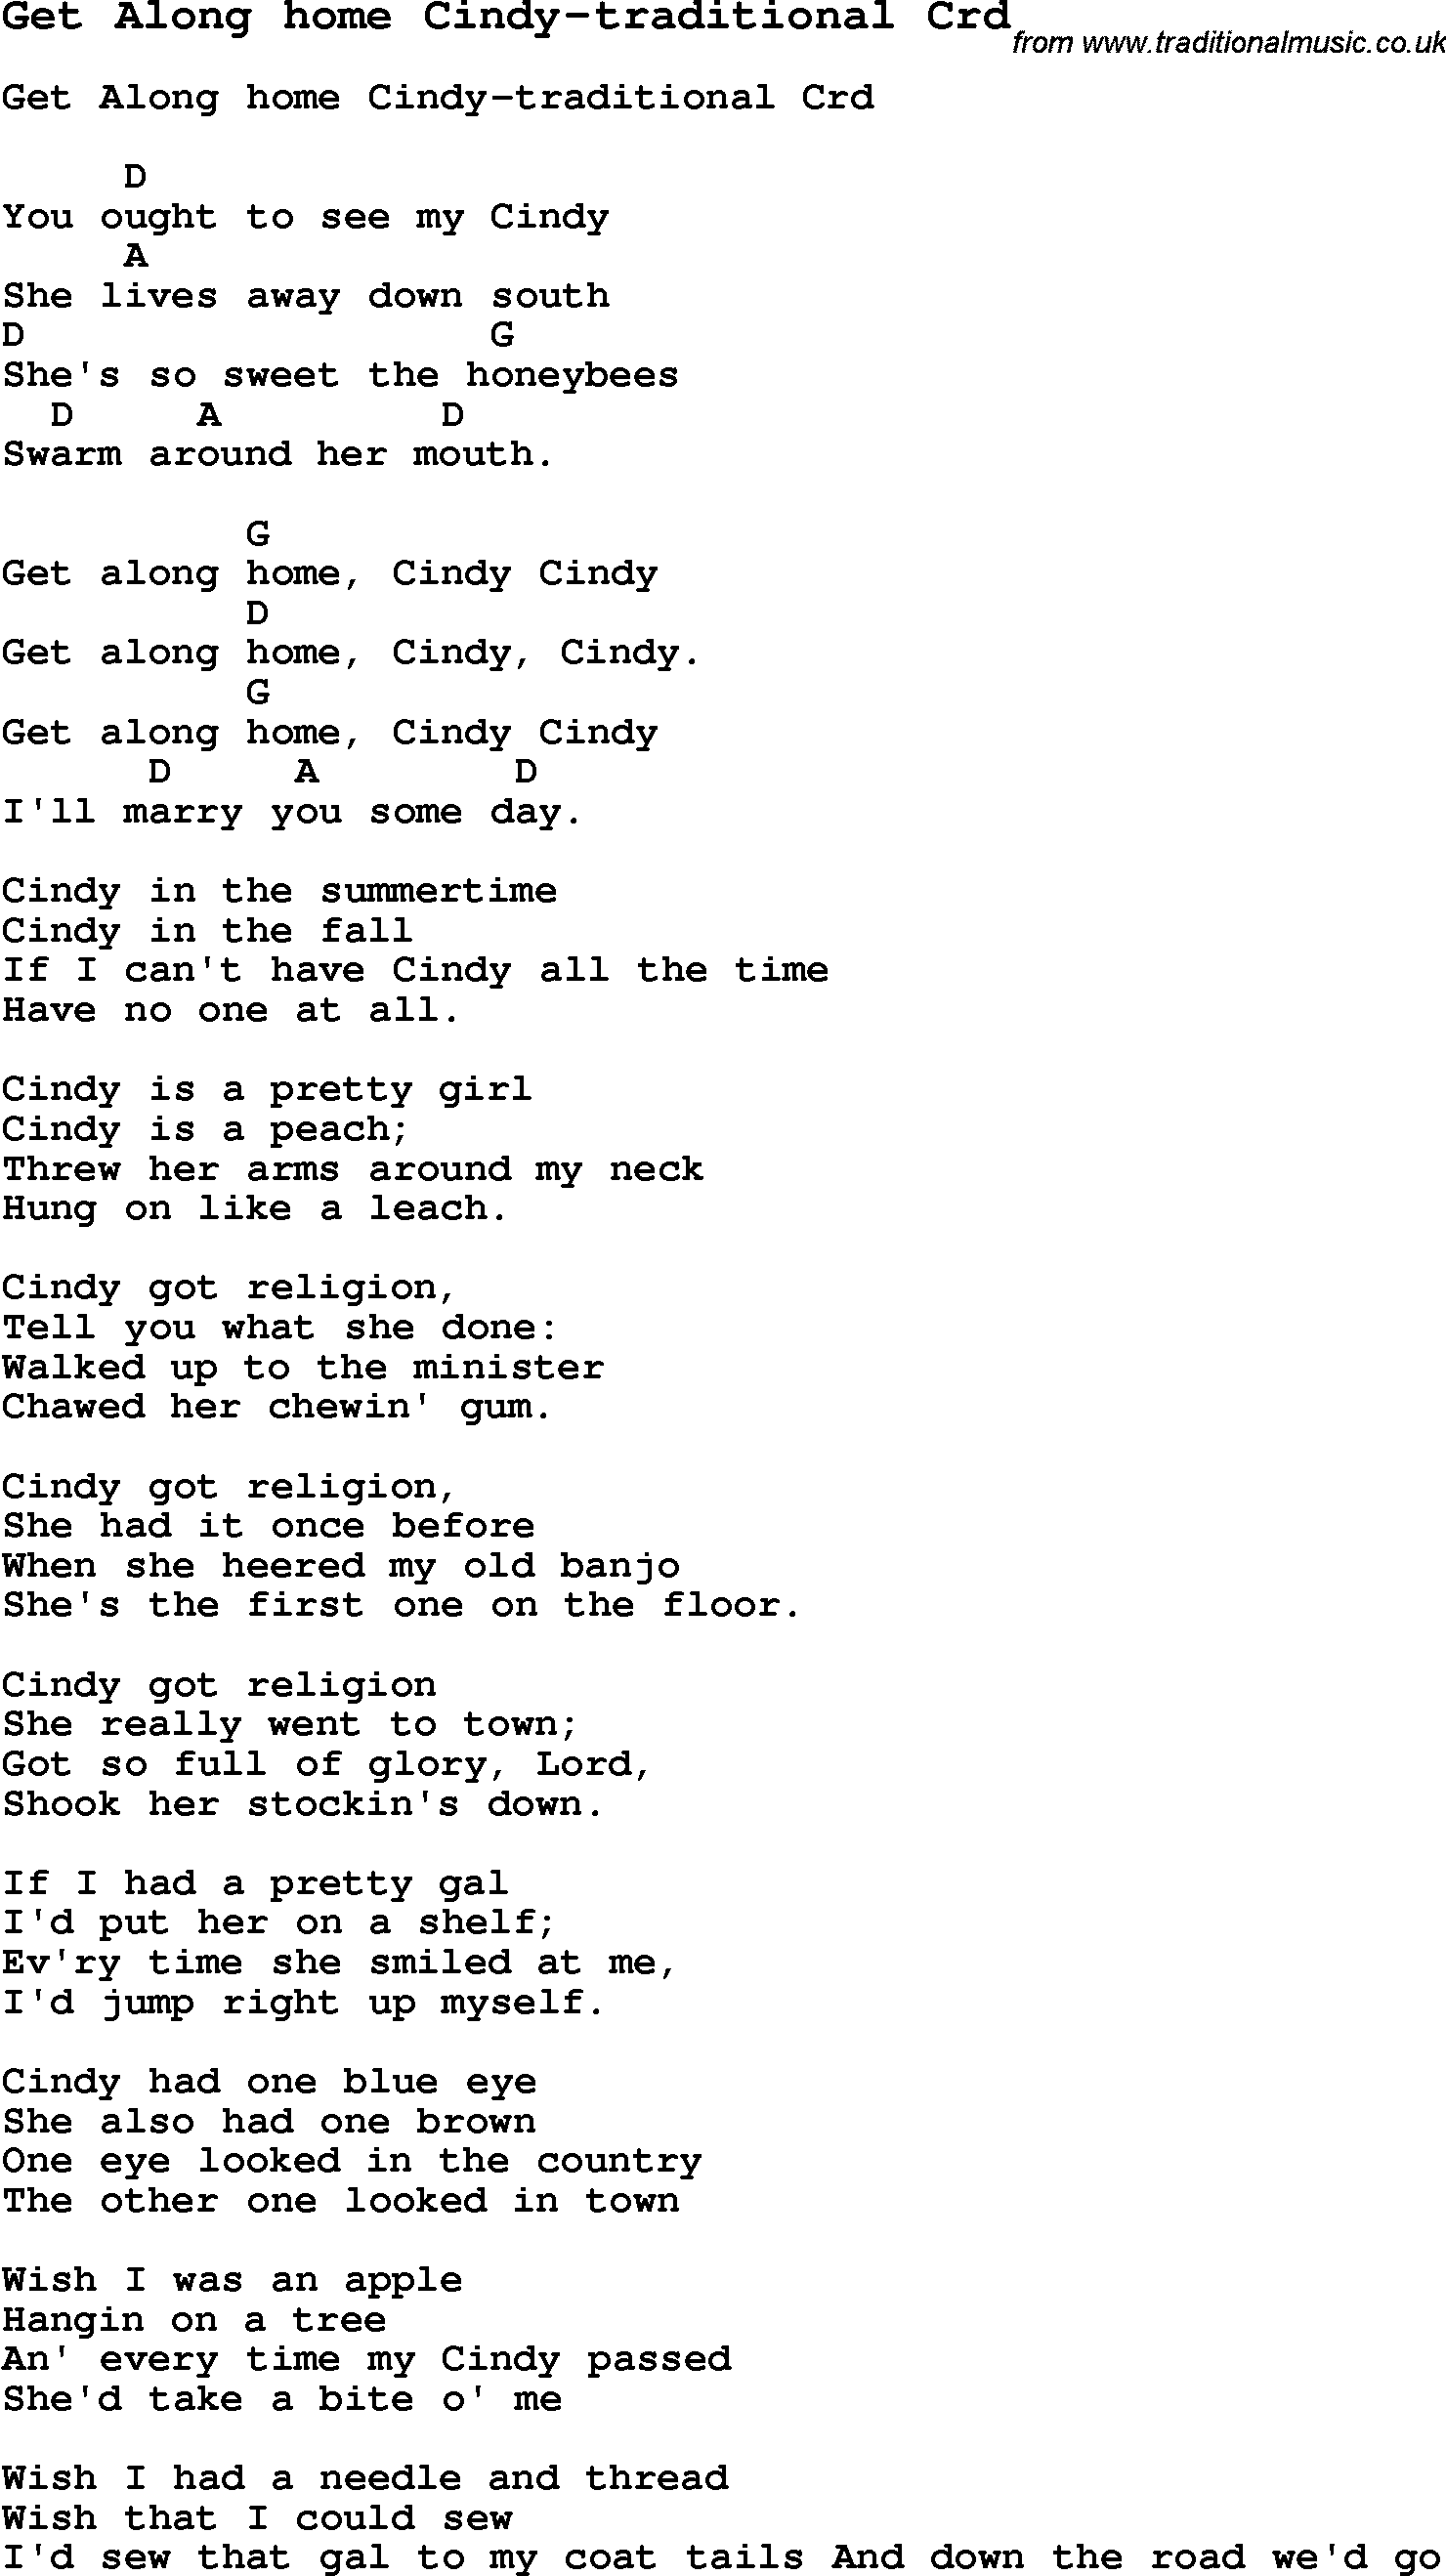 Skiffle Song Lyrics for Get Along Home Cindy-Traditional with chords for Mandolin, Ukulele, Guitar, Banjo etc.